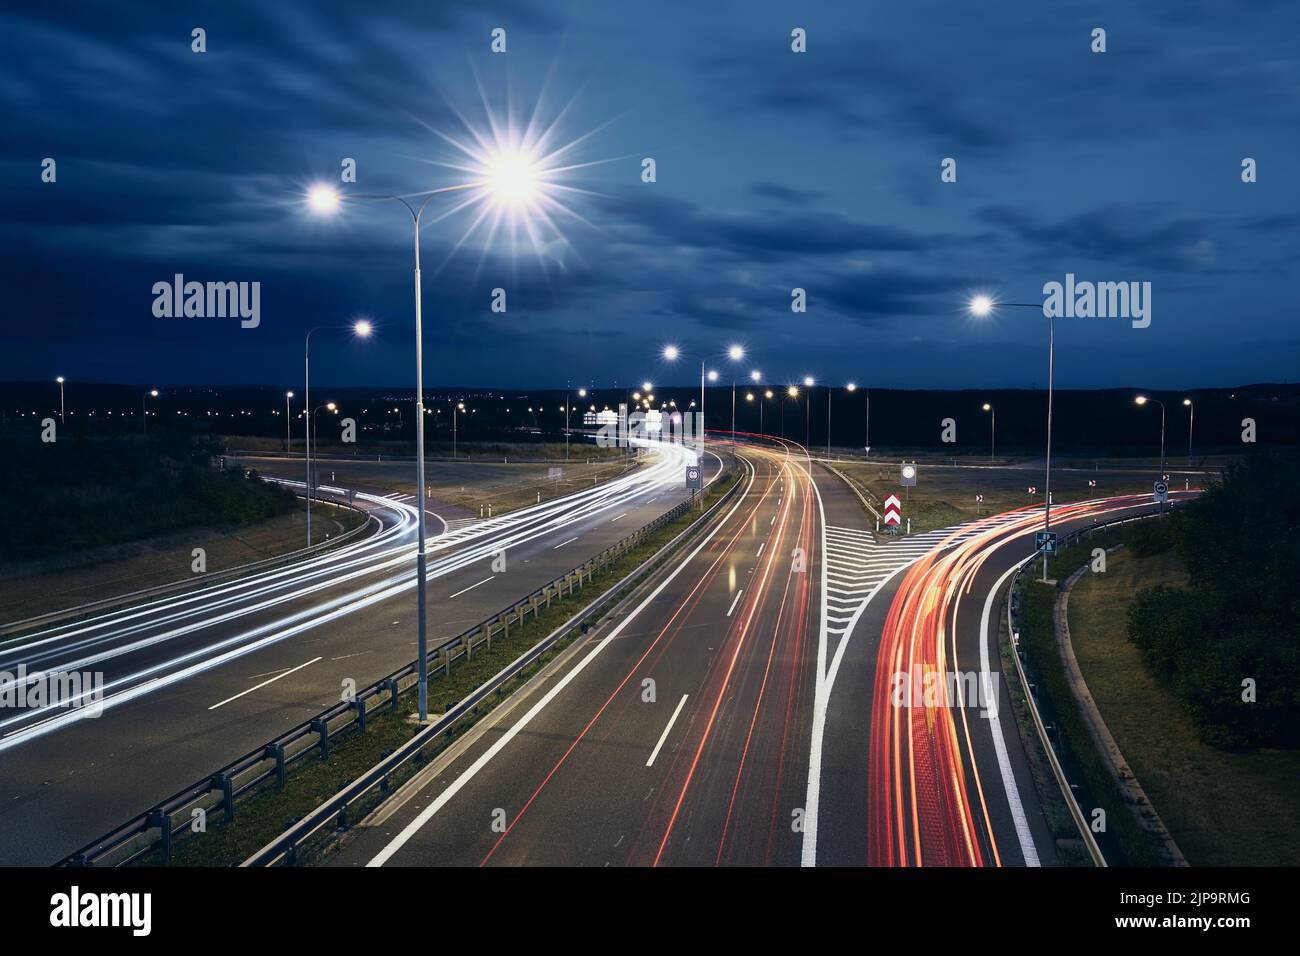 Light trails of cars. Traffic on illuminated highway at night. Stock Photo